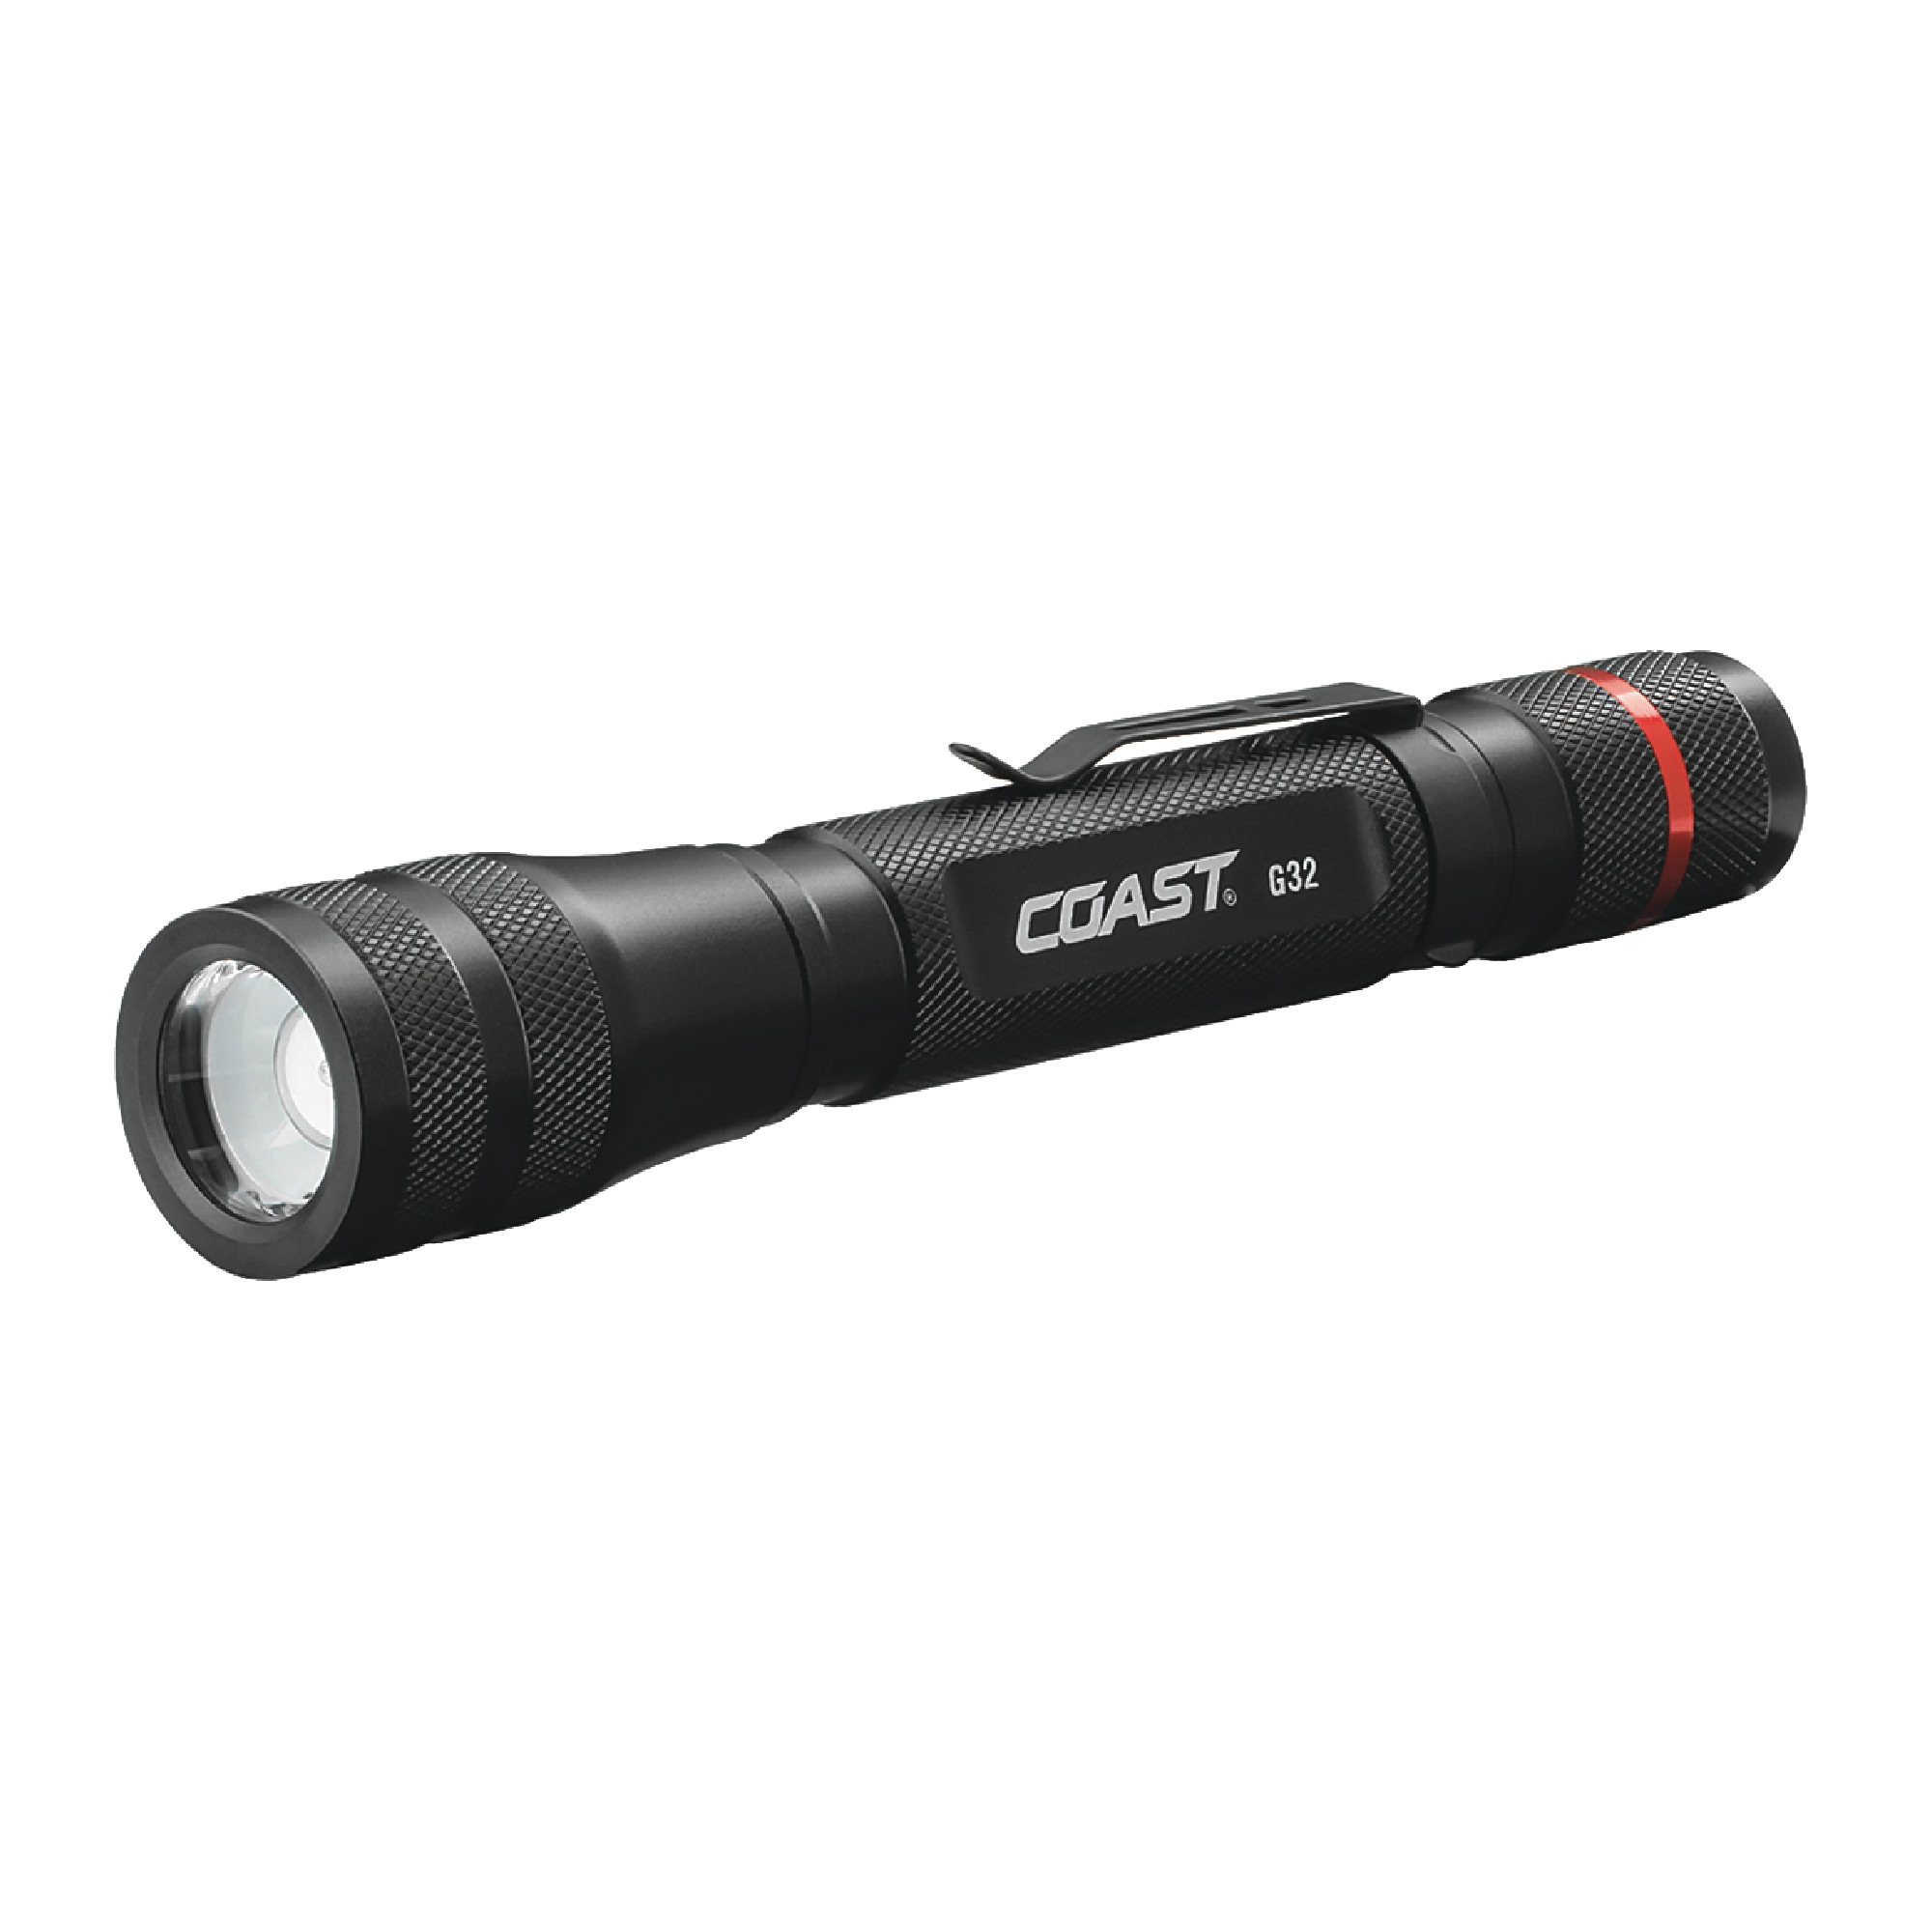 COAST G32 Handheld Flashlight